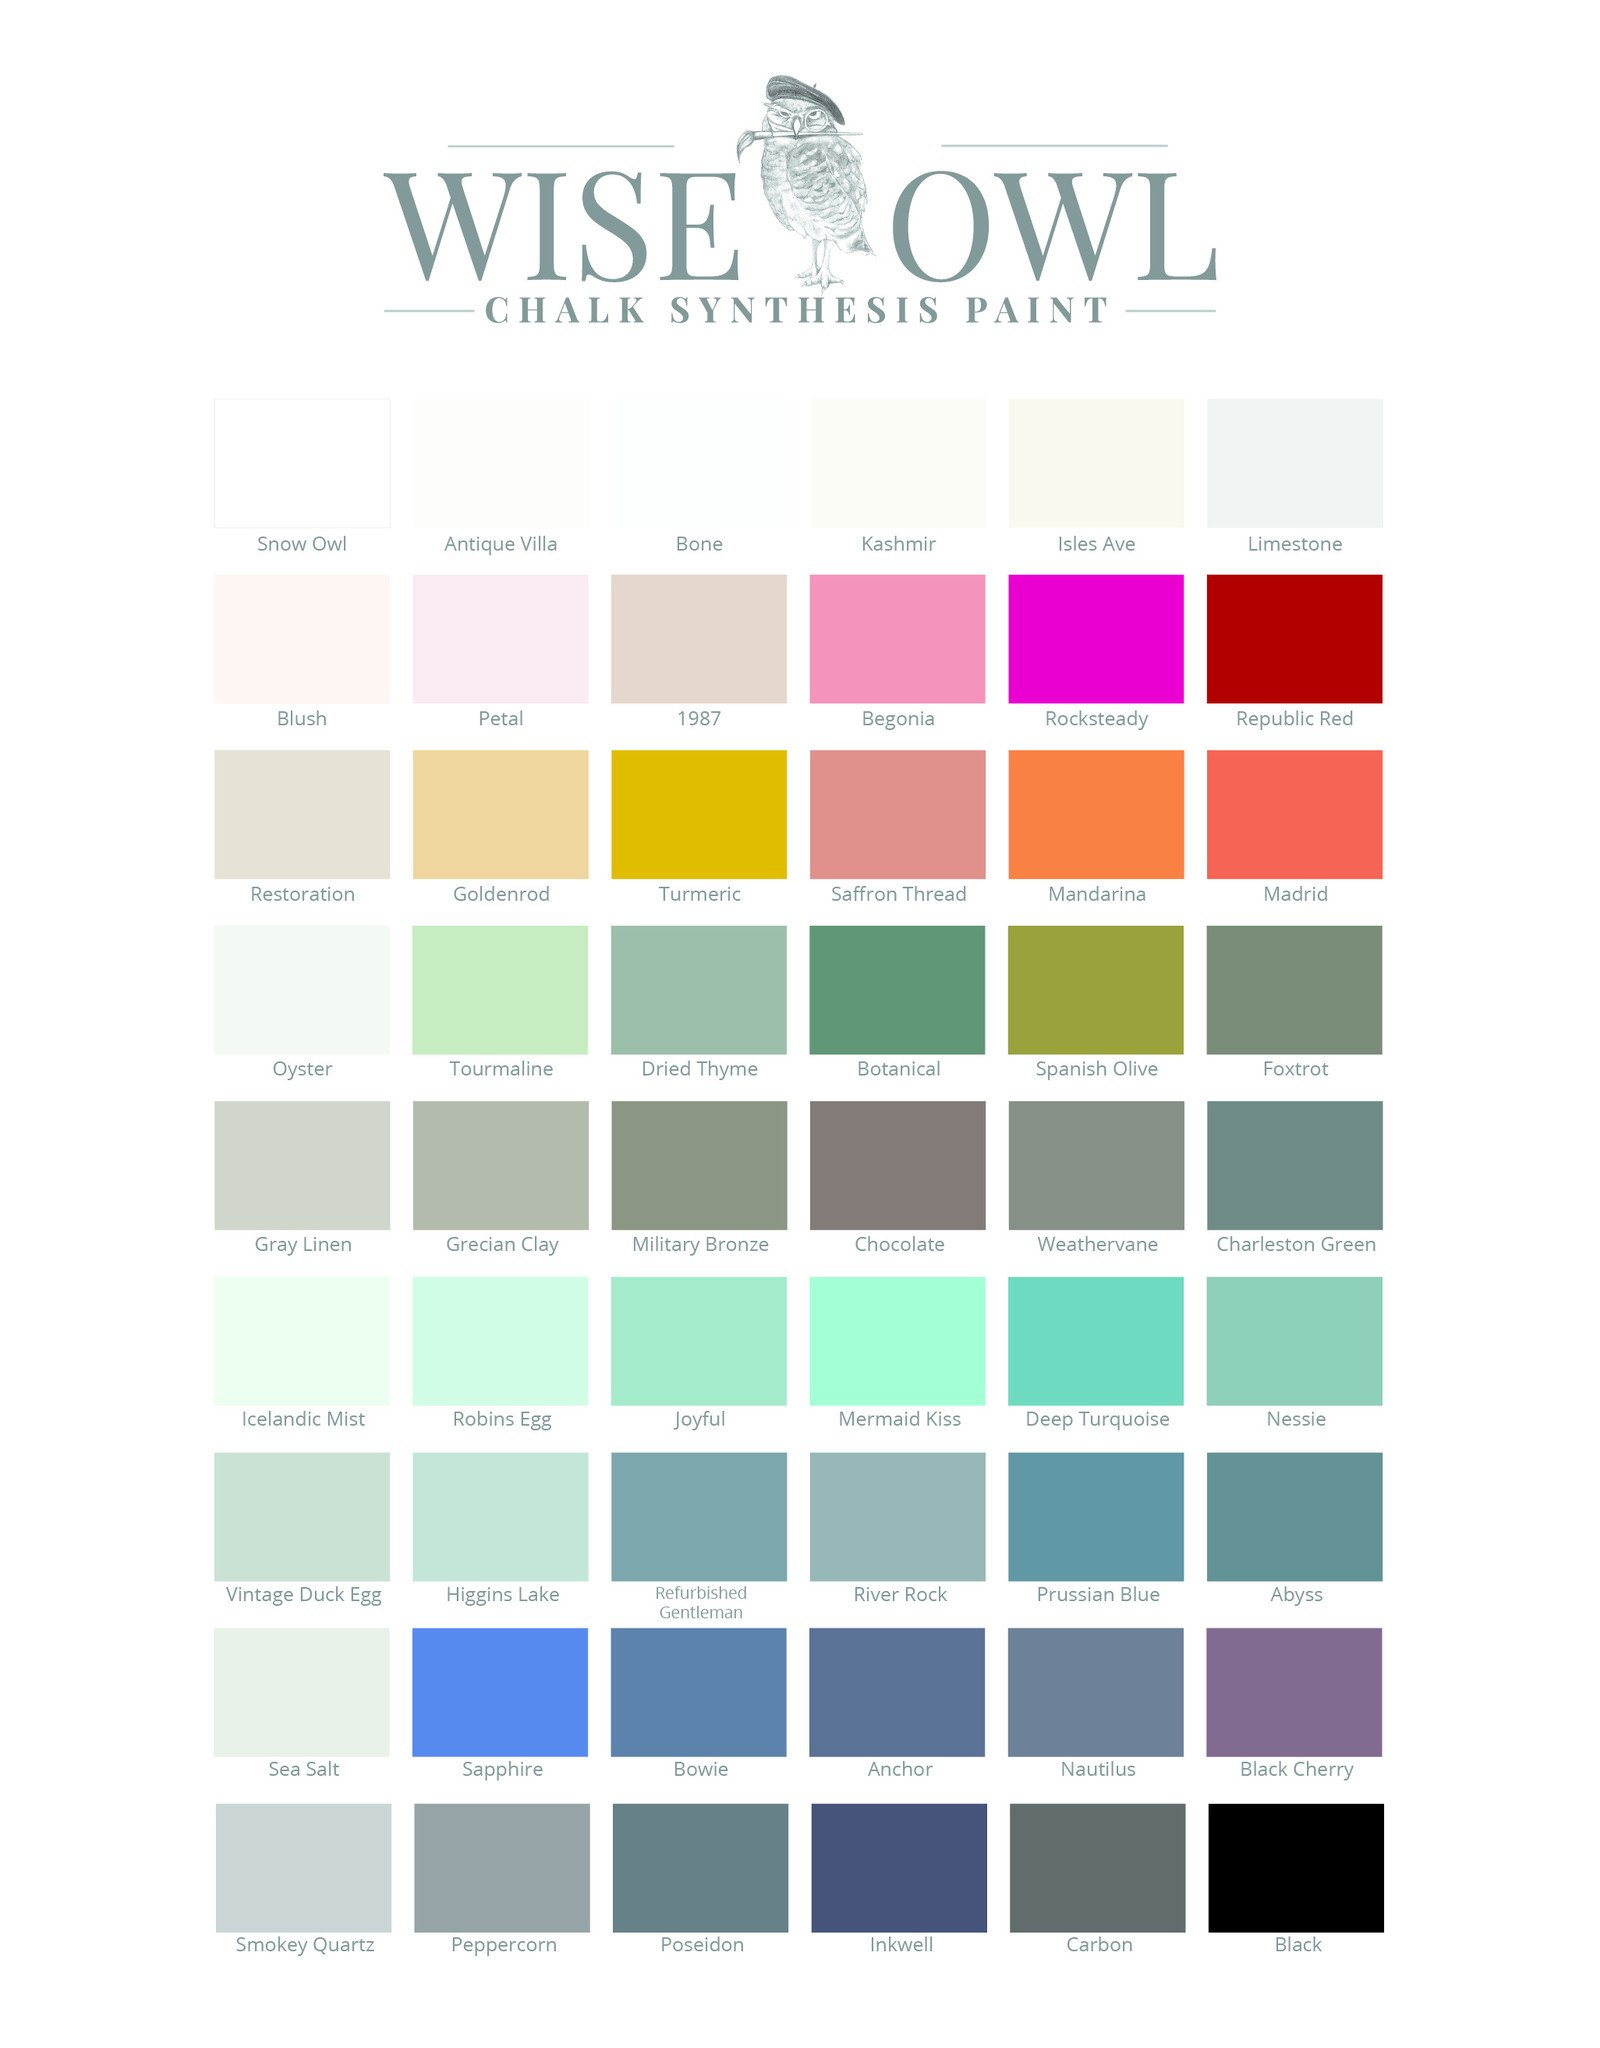 Wise Owl Paint Gray Linen Chalk Synthesis Paint-Pt